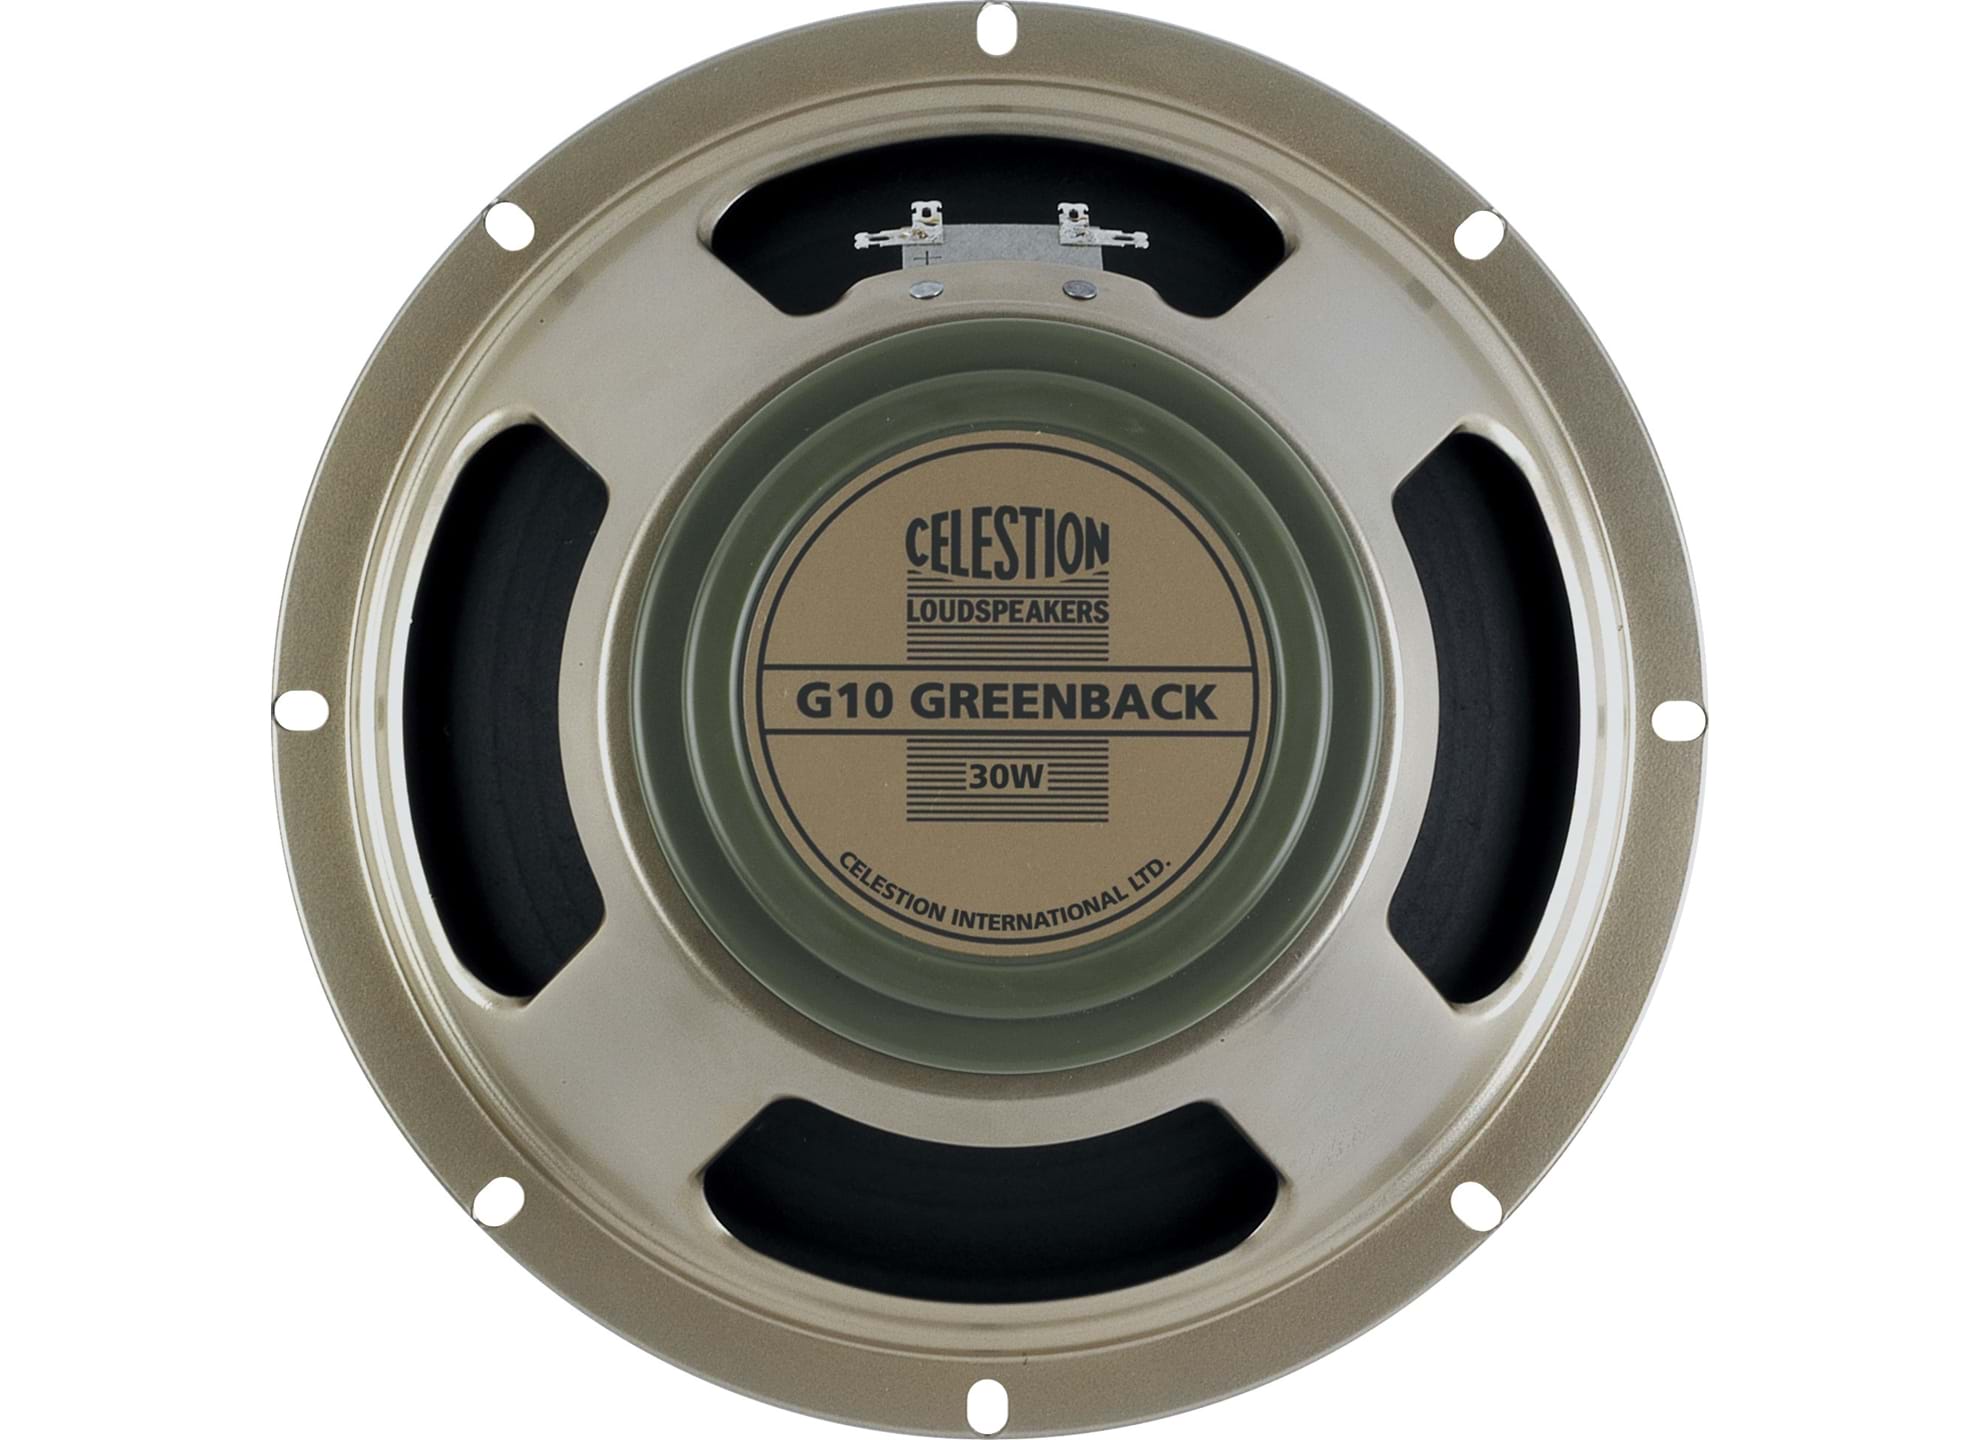 G10 Greenback 16R